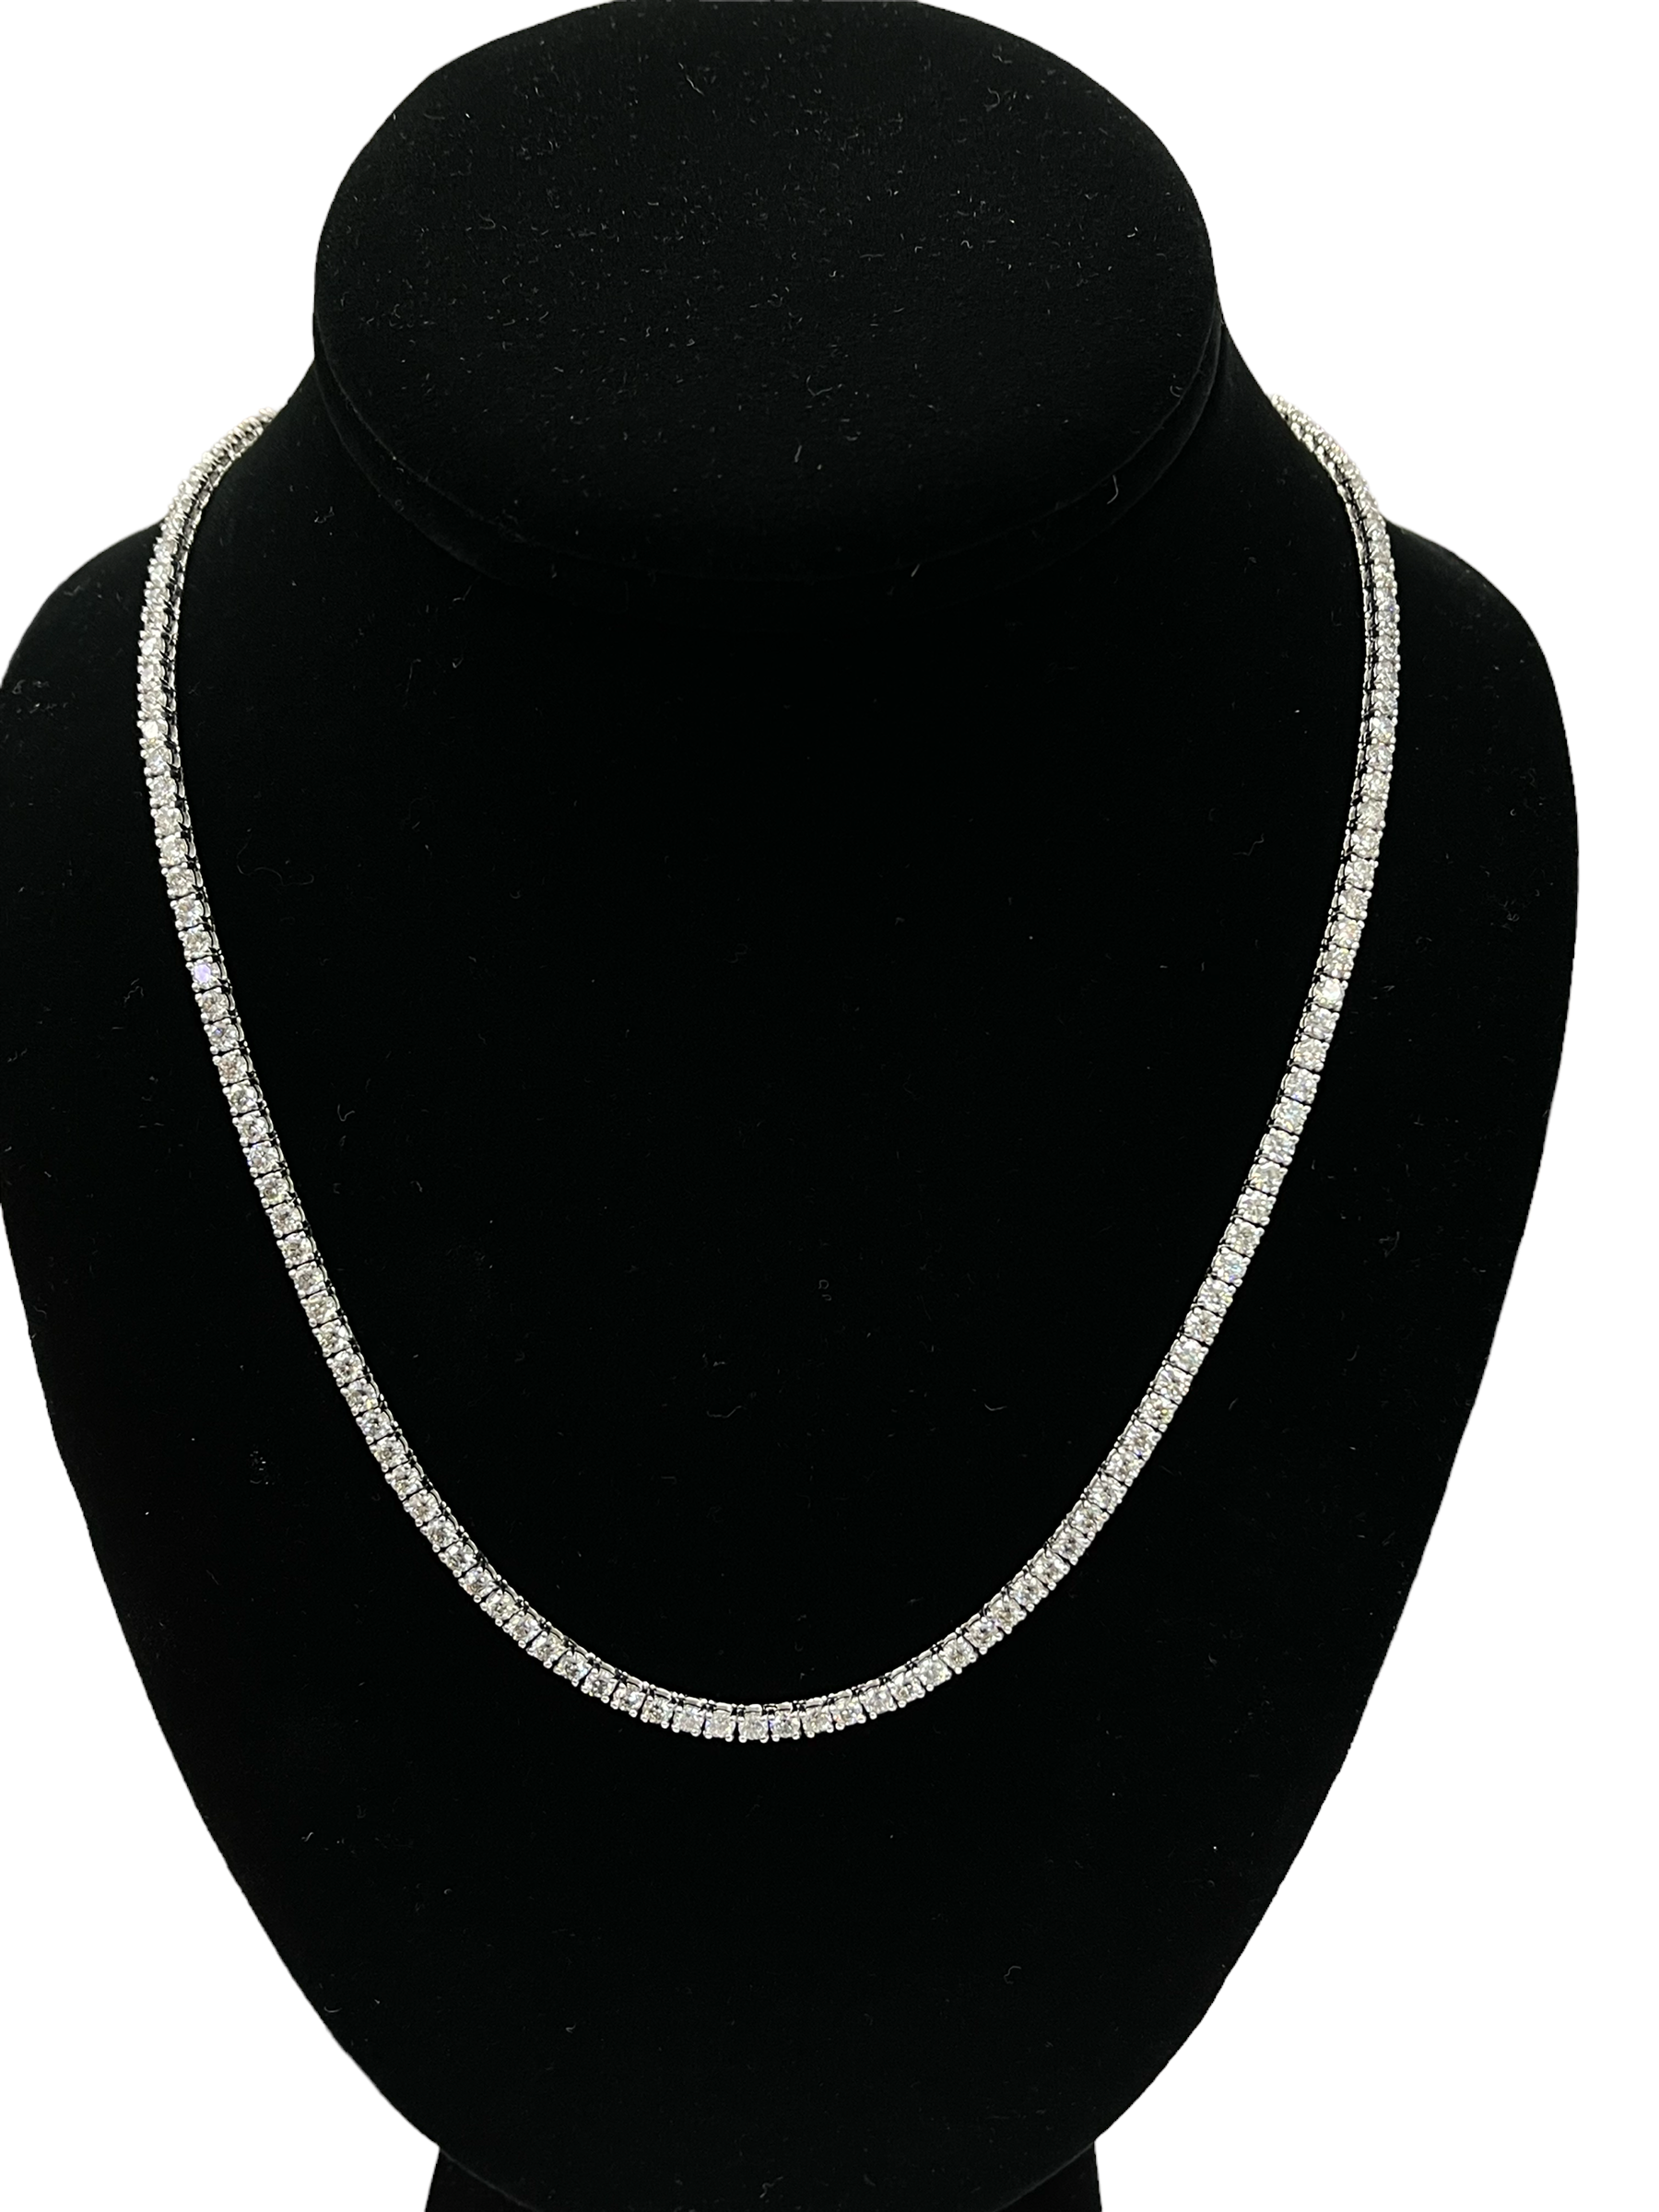 Tennis Diamond Necklace Chain Round Brilliants 12.64 Carats White Gold